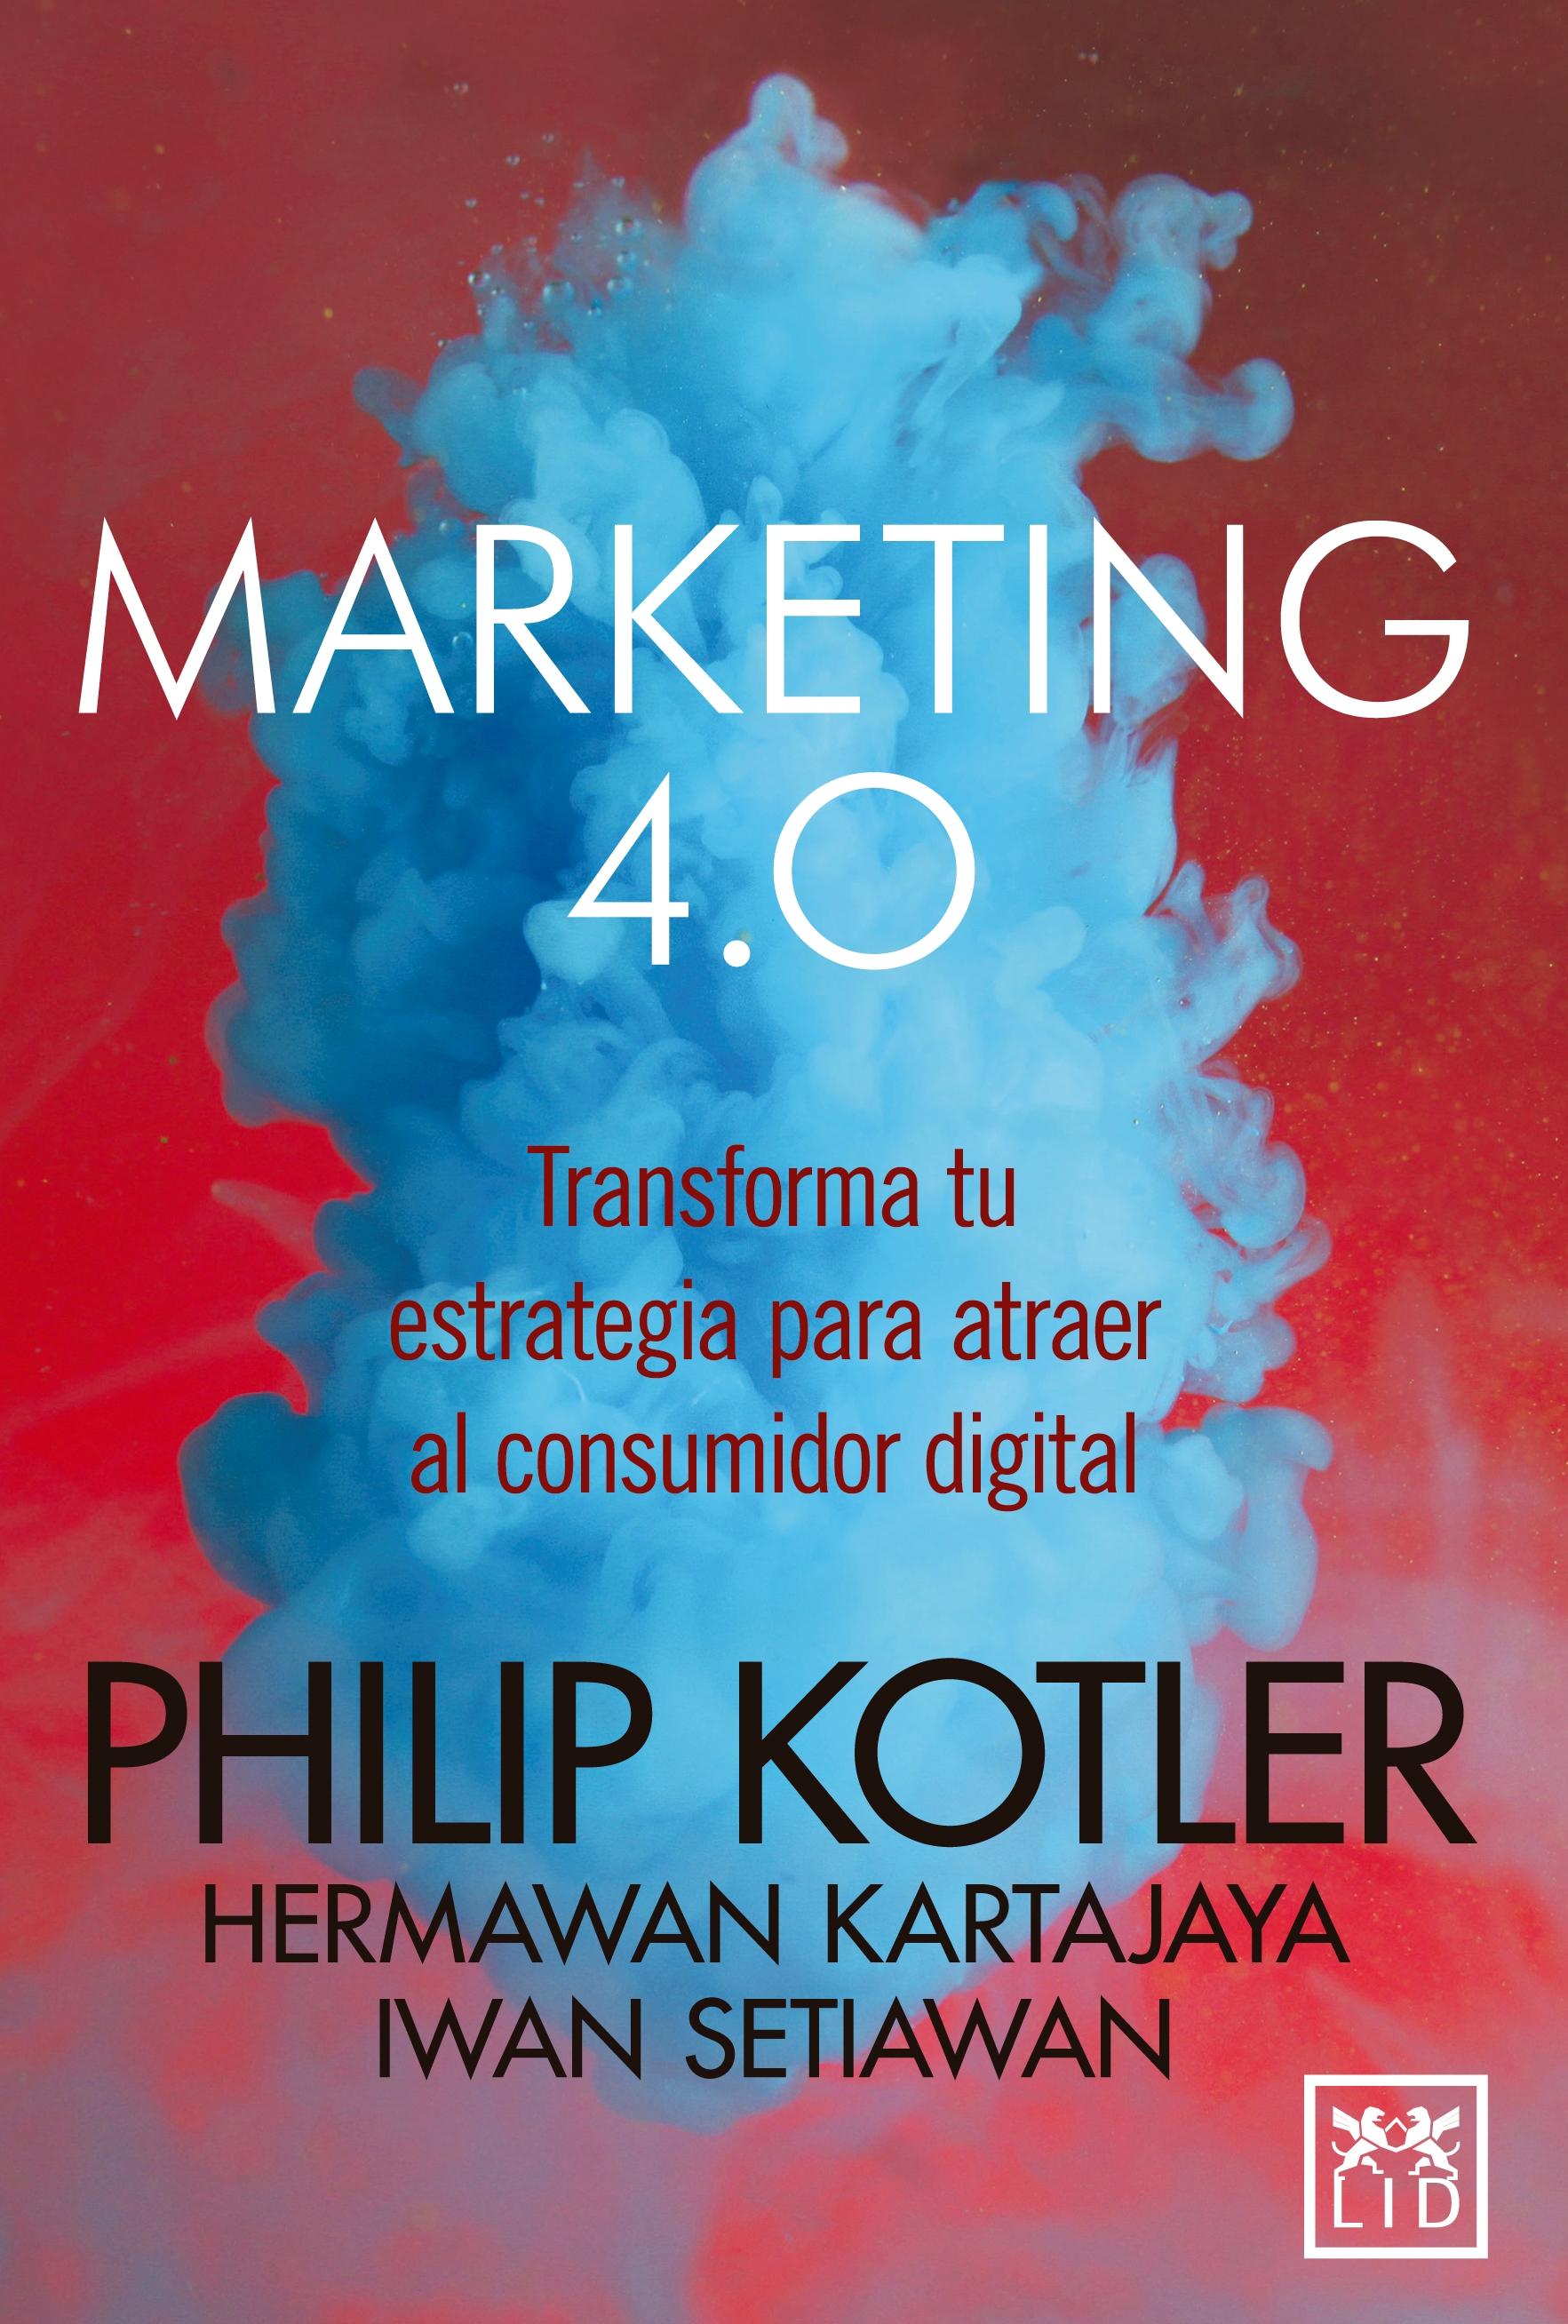 Marketing 4.0 "Transforma tu estrategia para atraer al consumidor digital "